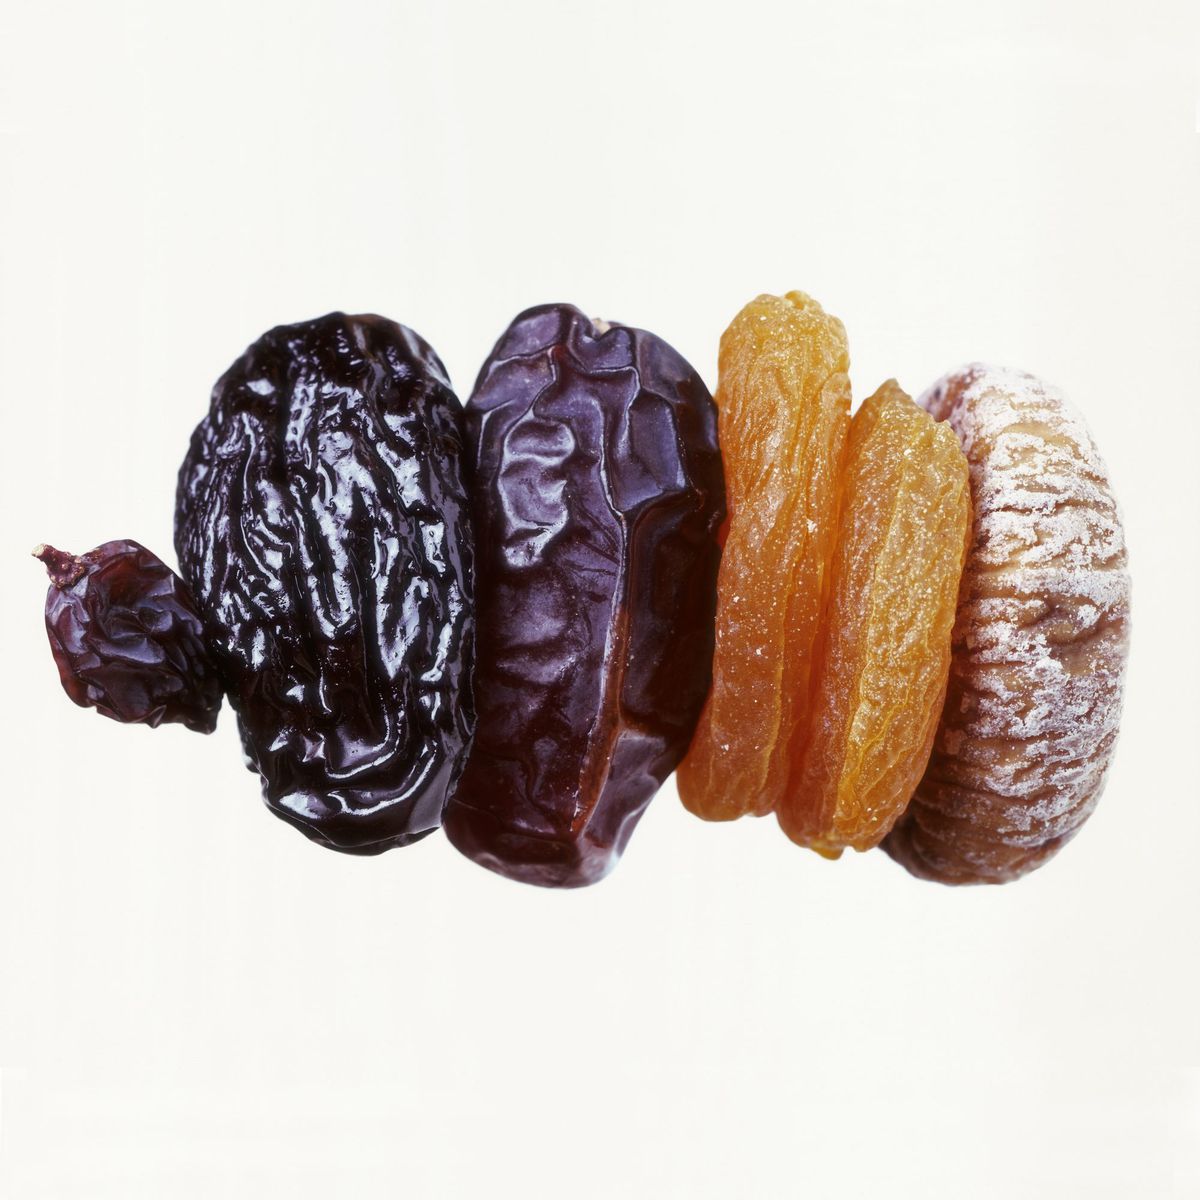 Dried fruit